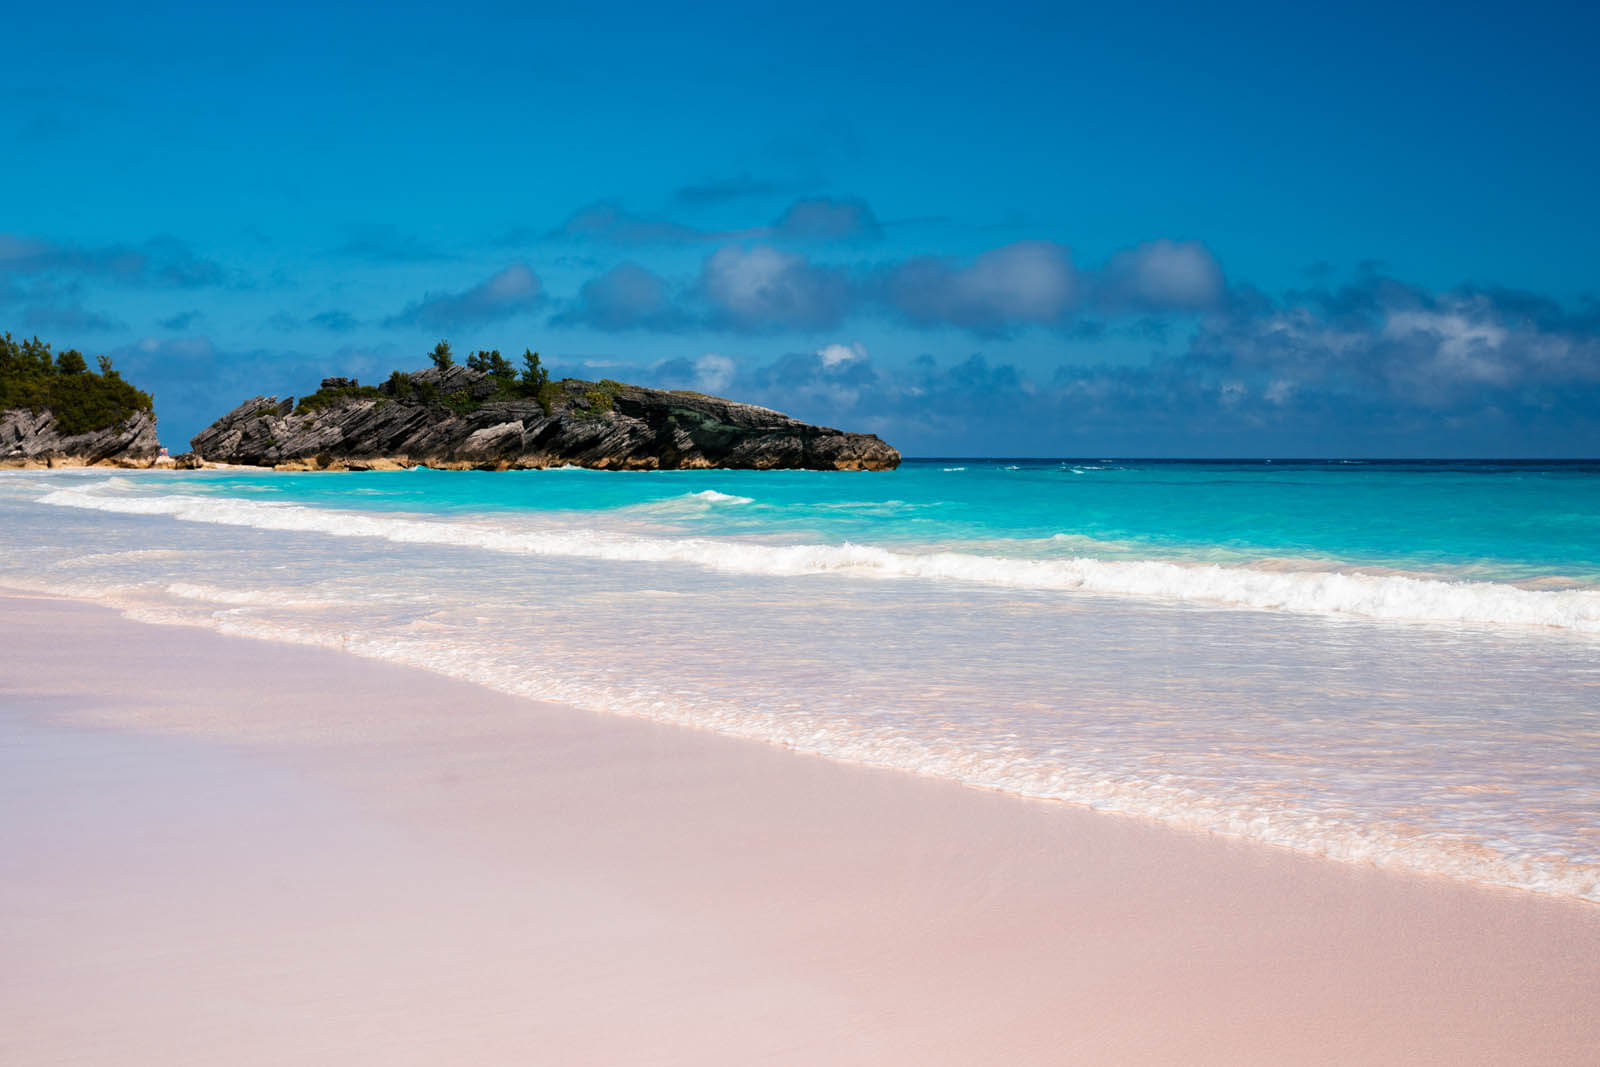 Visiting Bermuda's Horseshoe Bay Beach (Everything You Need to